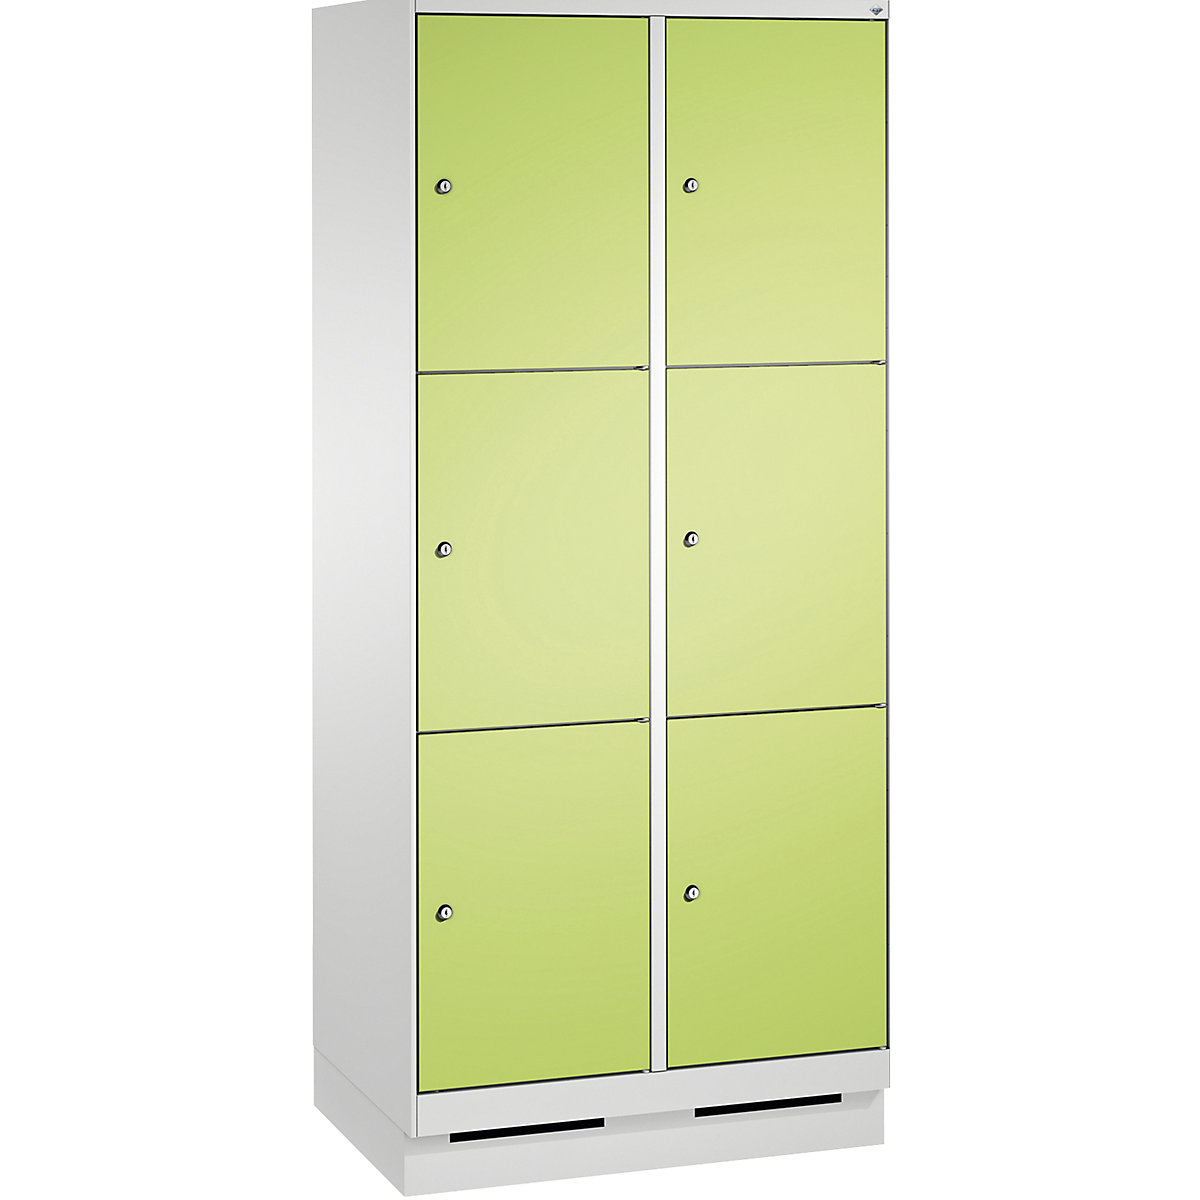 EVOLO locker unit, with plinth – C+P, 2 compartments, 3 shelf compartments each, compartment width 400 mm, light grey / viridian green-15